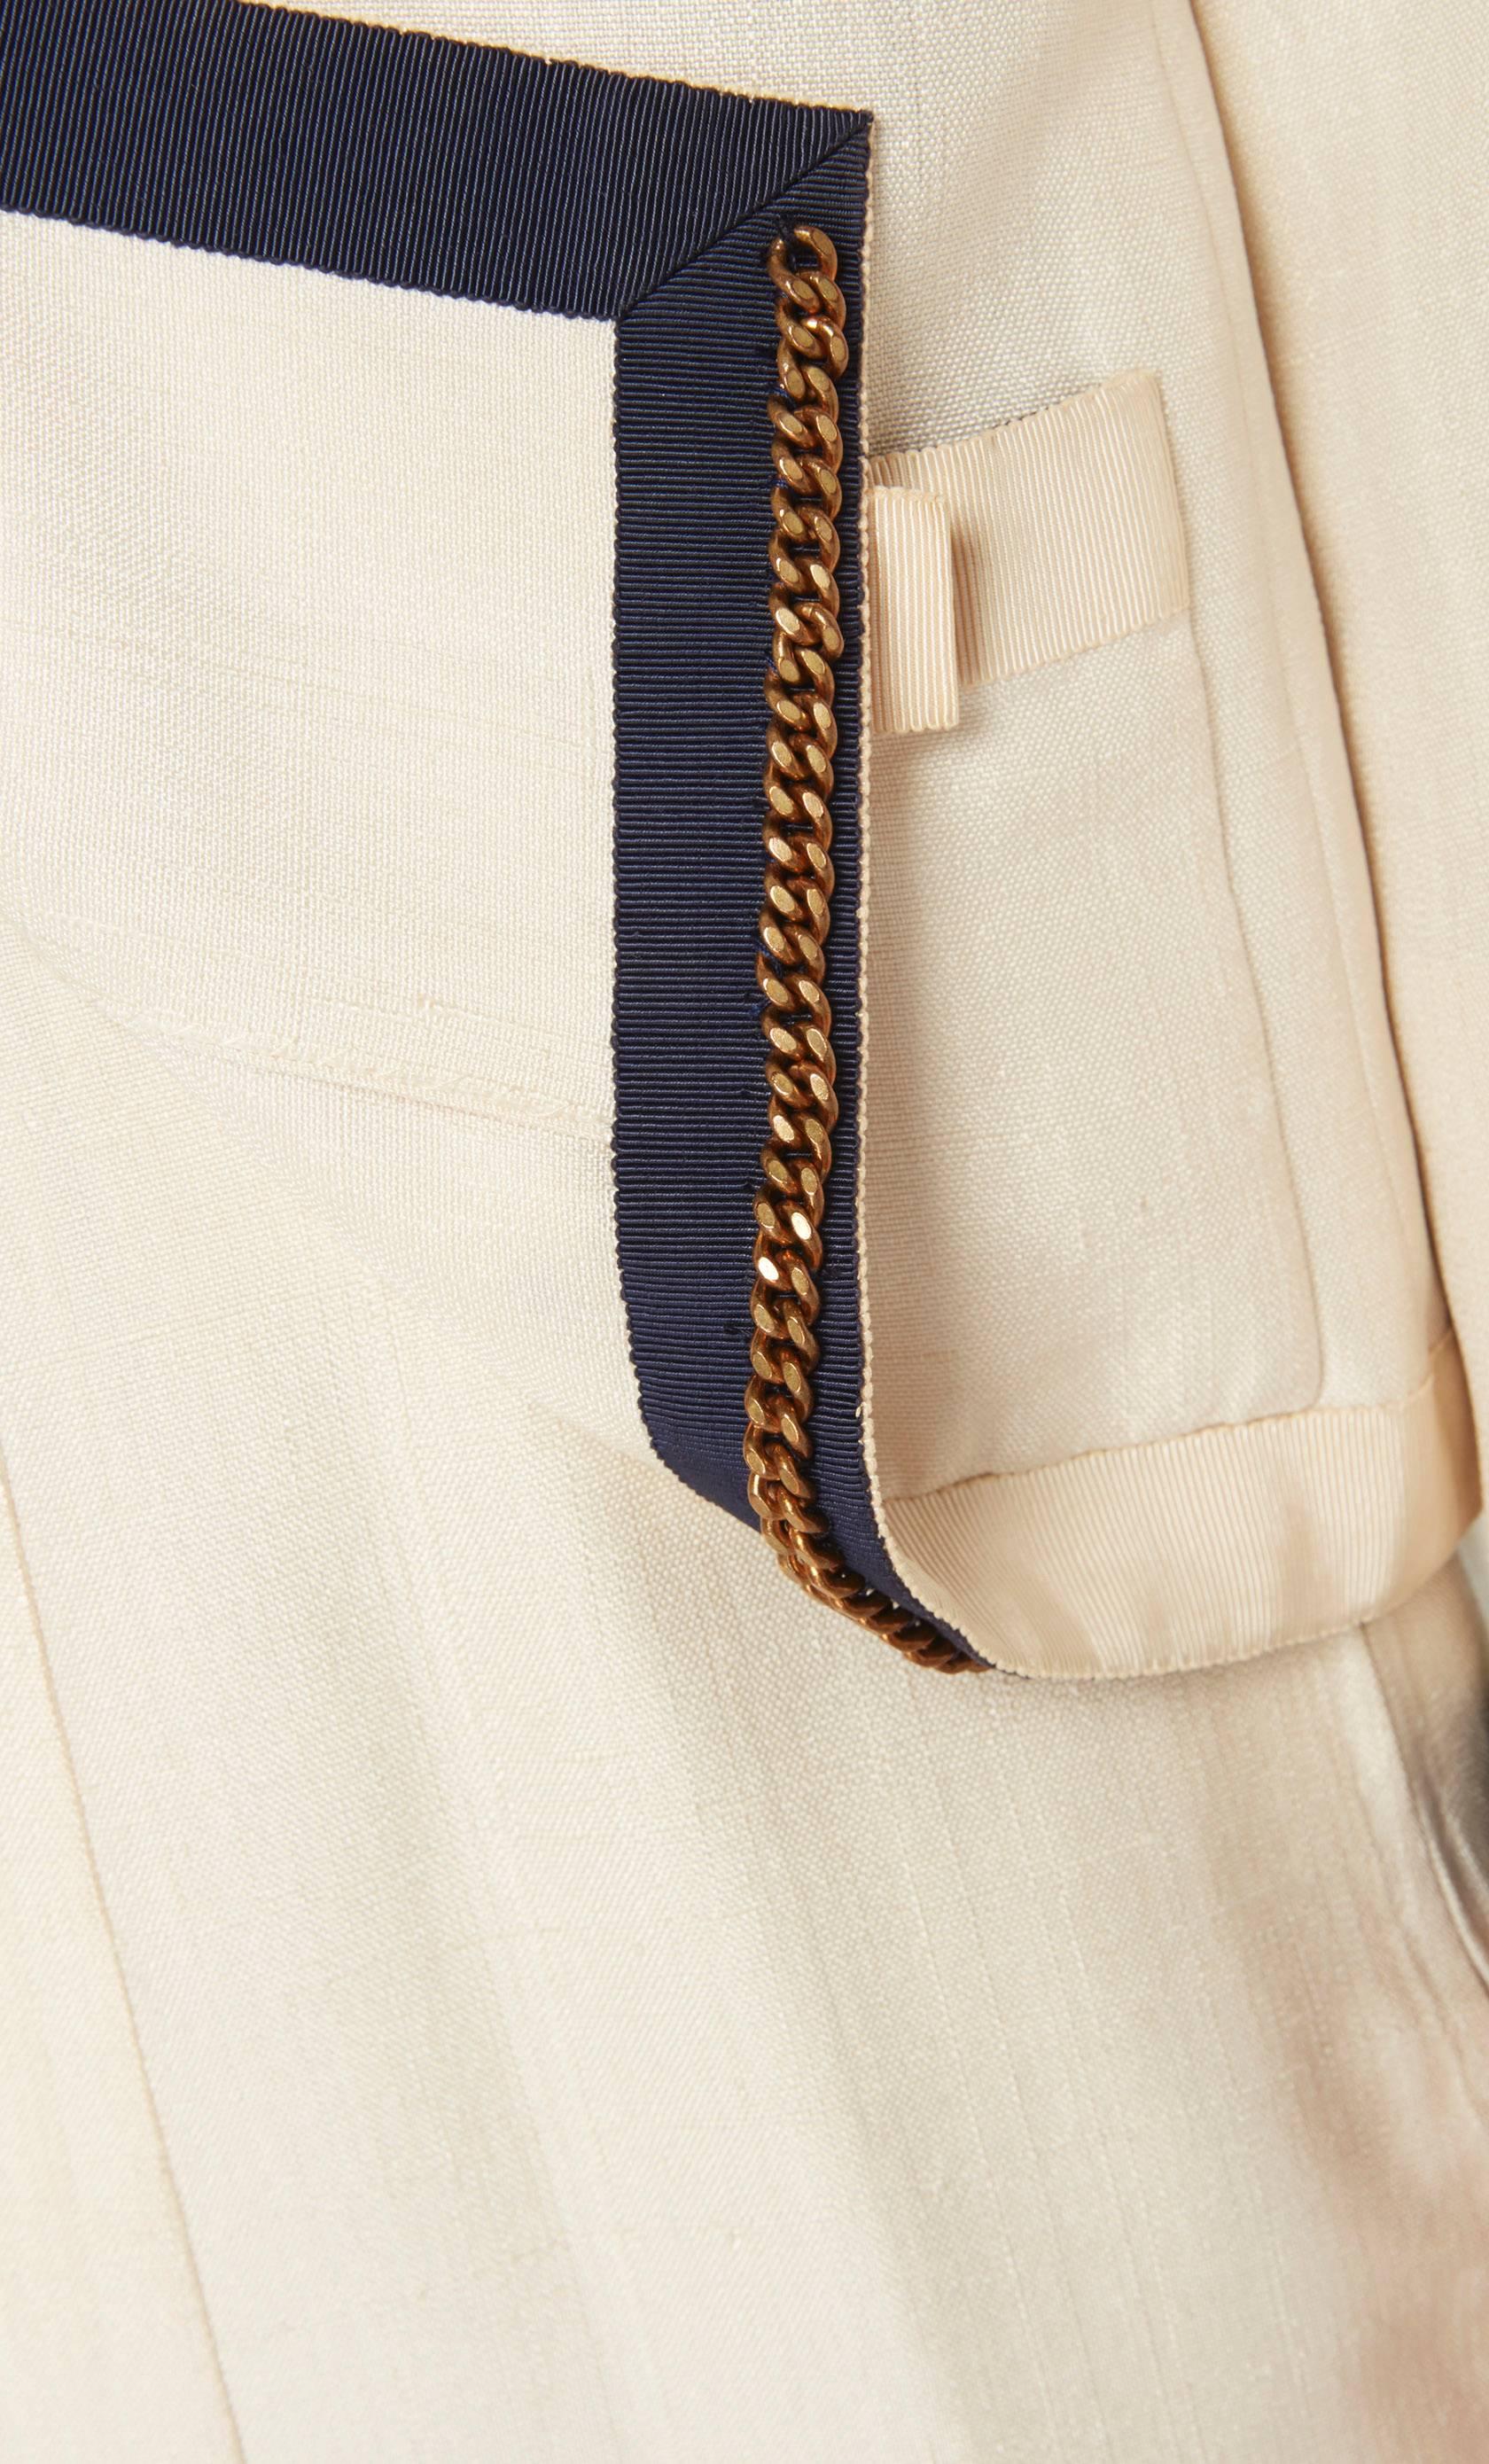 Women's Chanel haute couture ivory suit, circa 1962